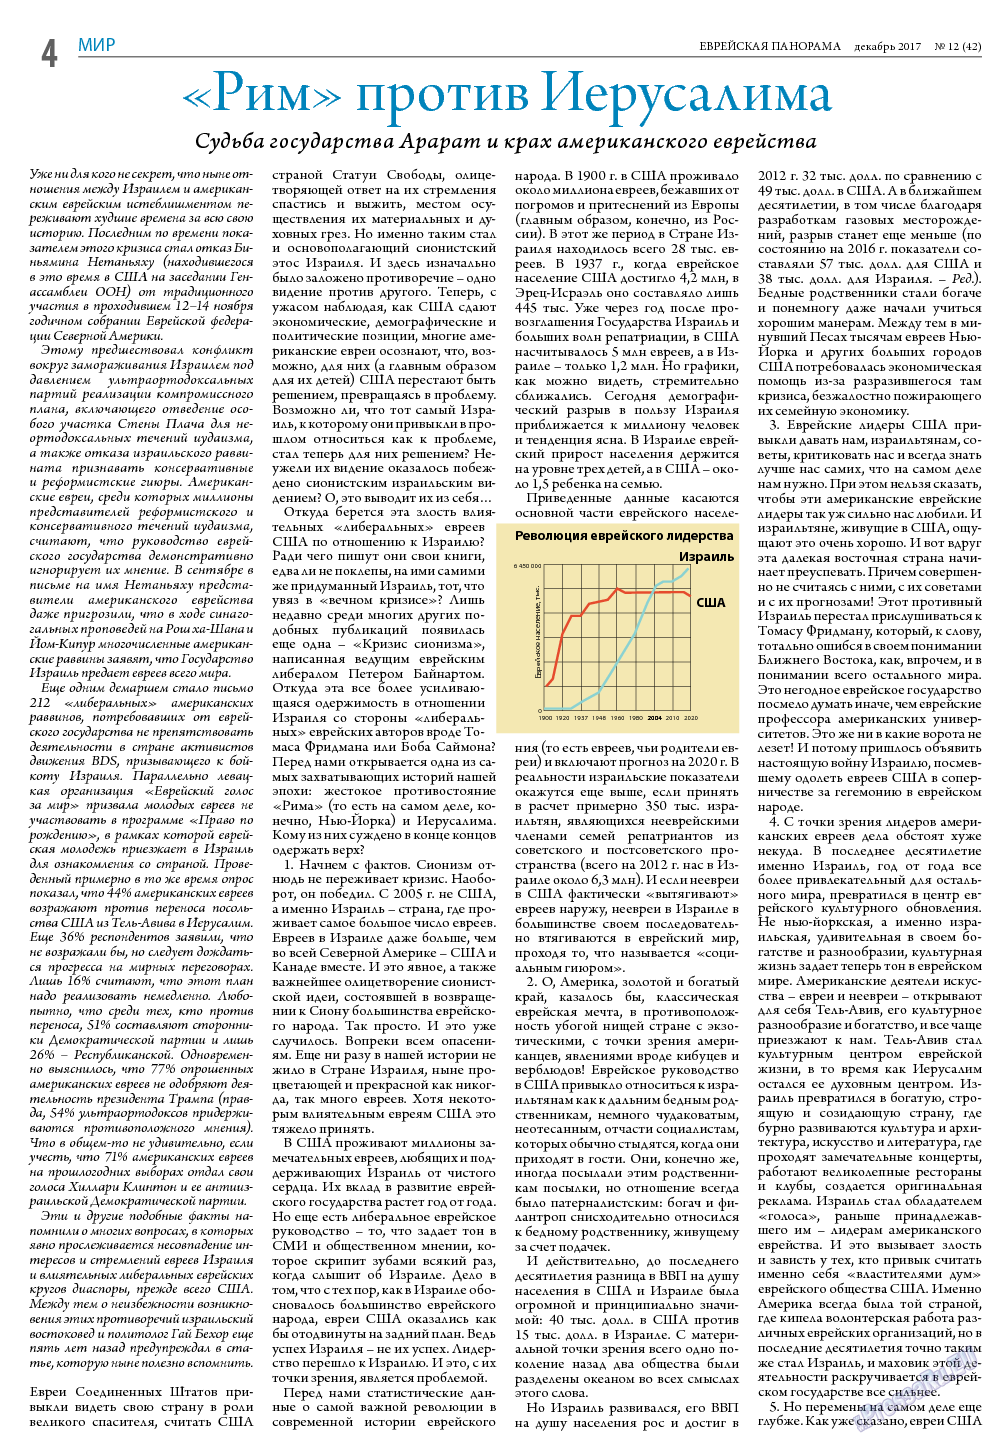 Еврейская панорама, газета. 2017 №12 стр.4